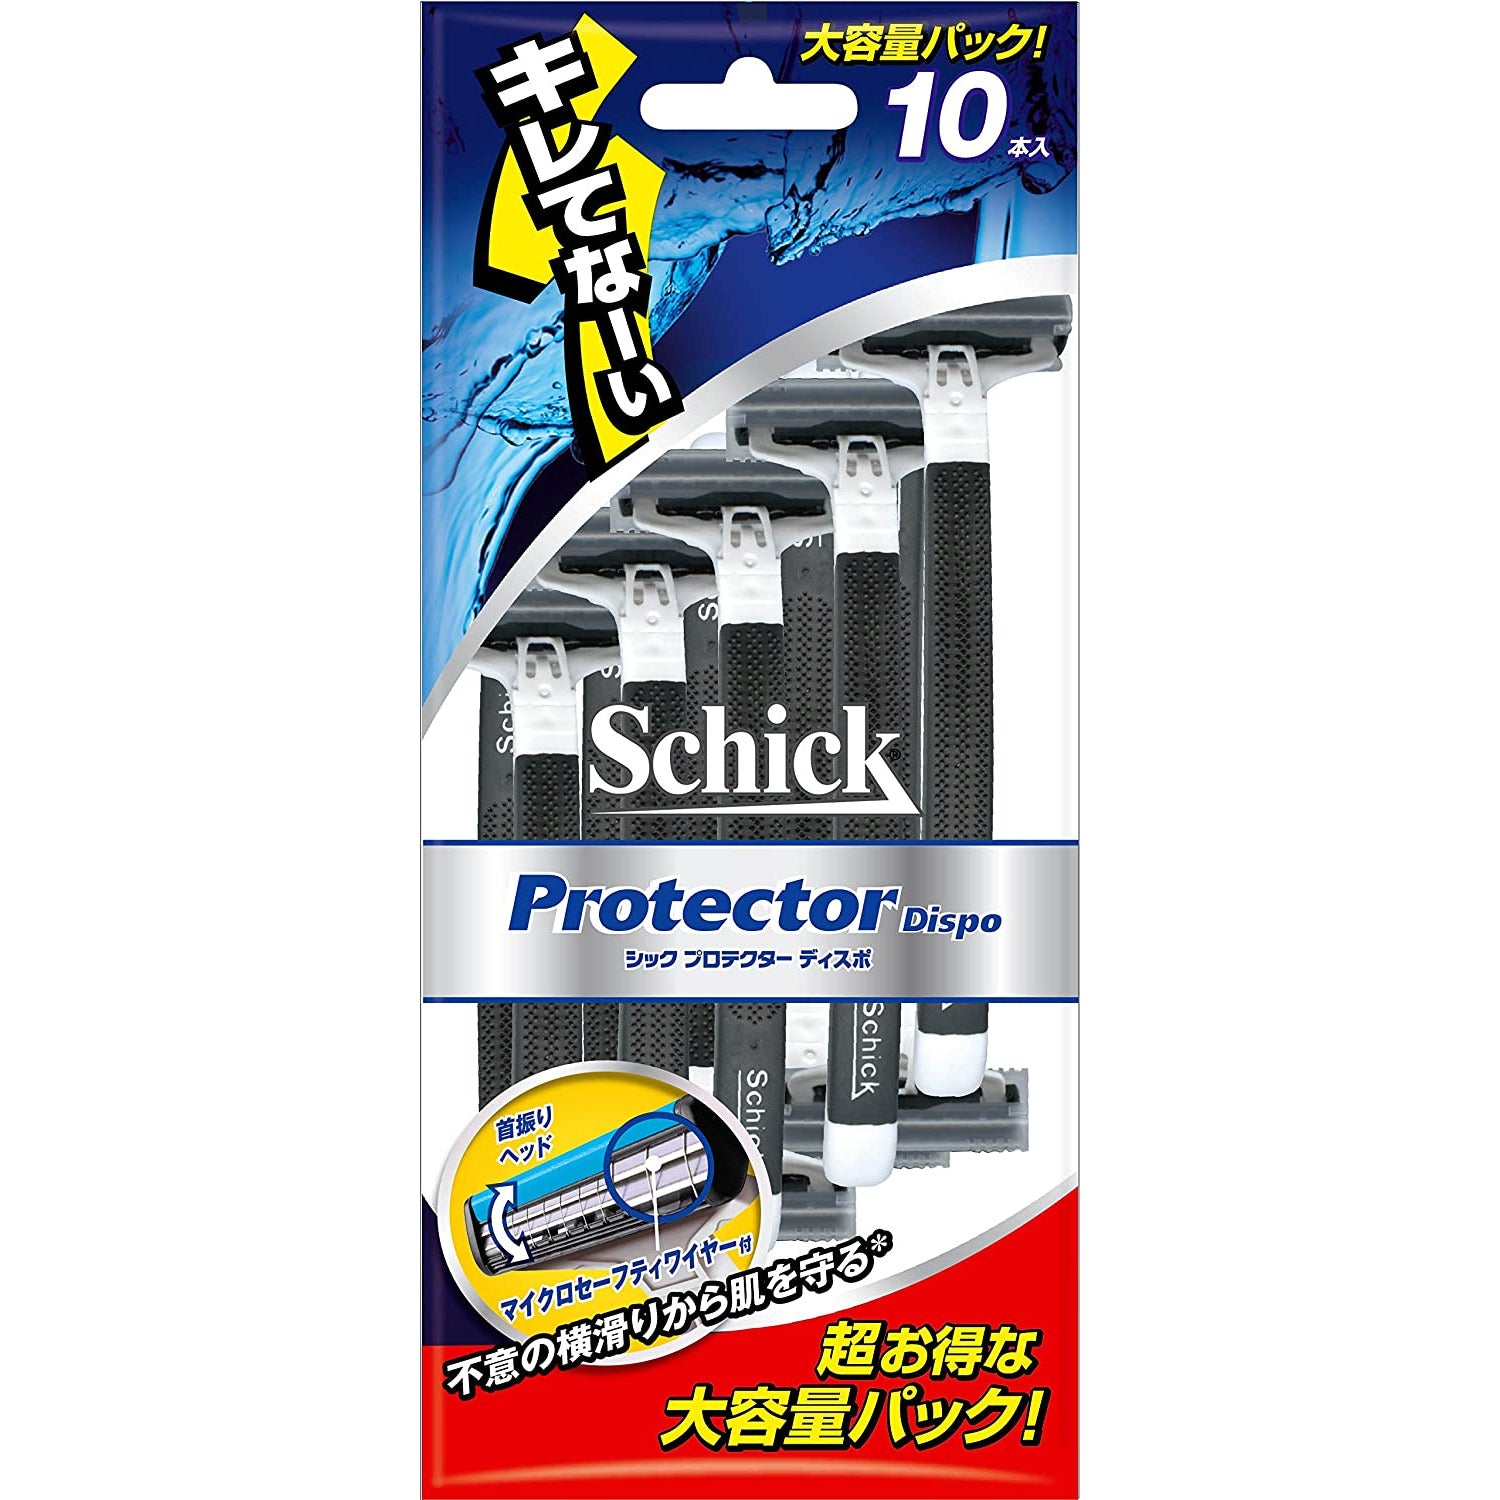 Schick Protector Disposable 10 pieces